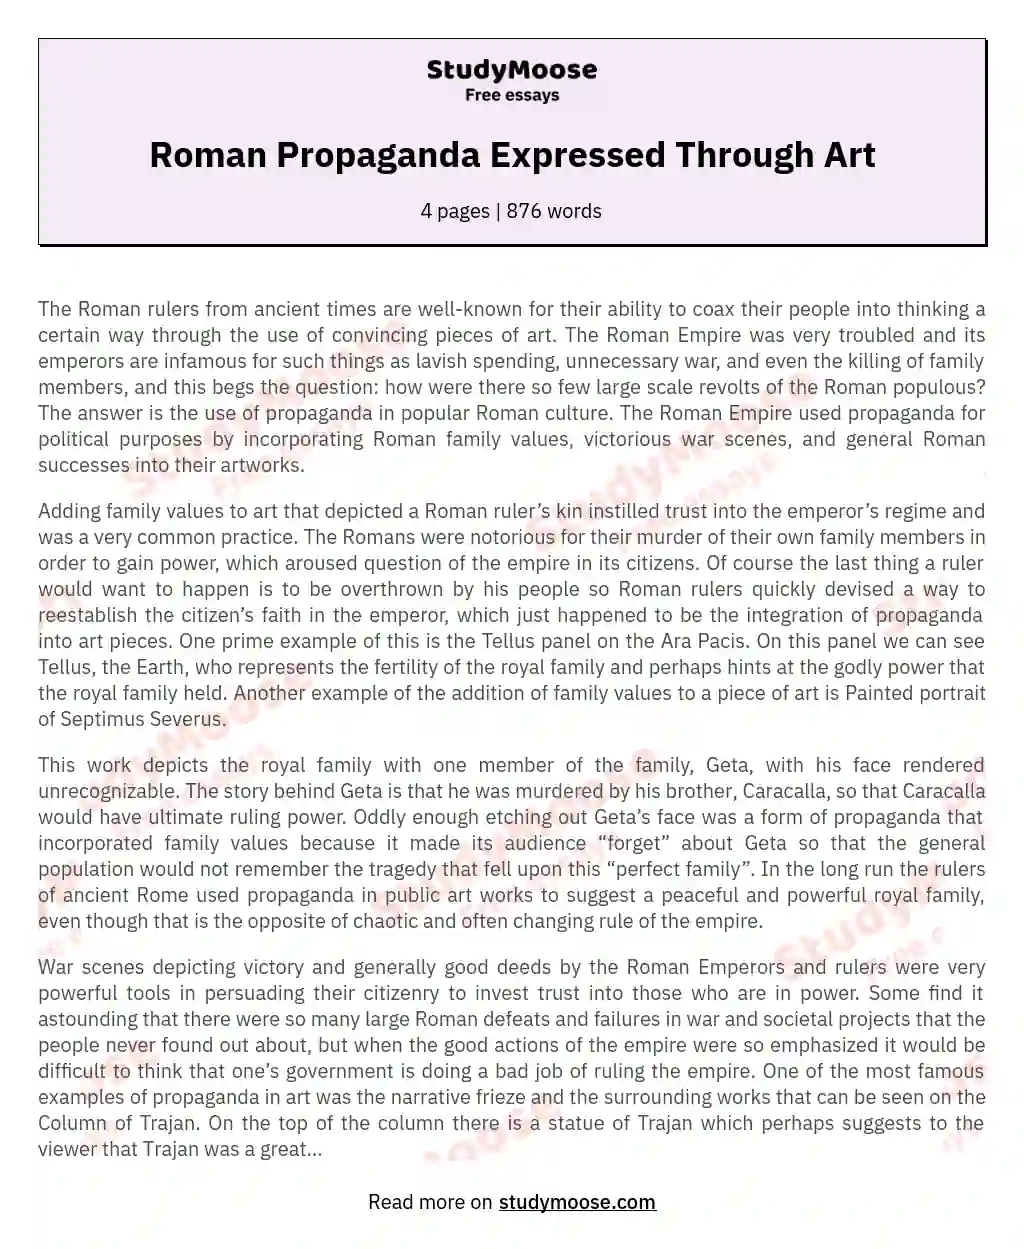 Roman Propaganda Expressed Through Art essay